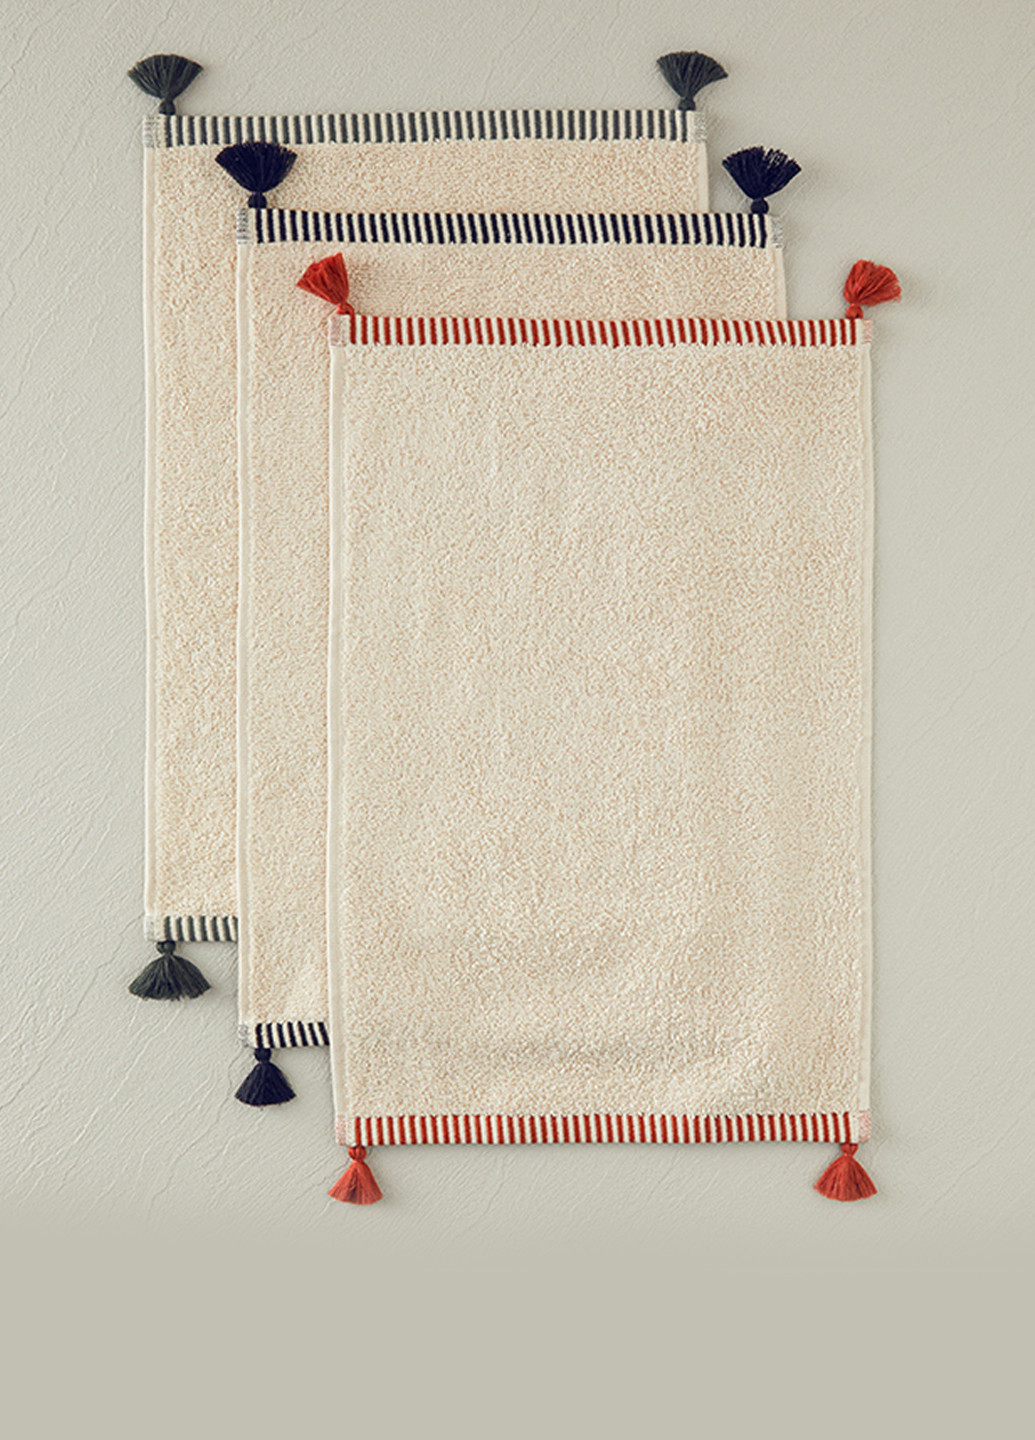 English Home полотенце для рук, 30х45 см однотонный светло-бежевый производство - Турция